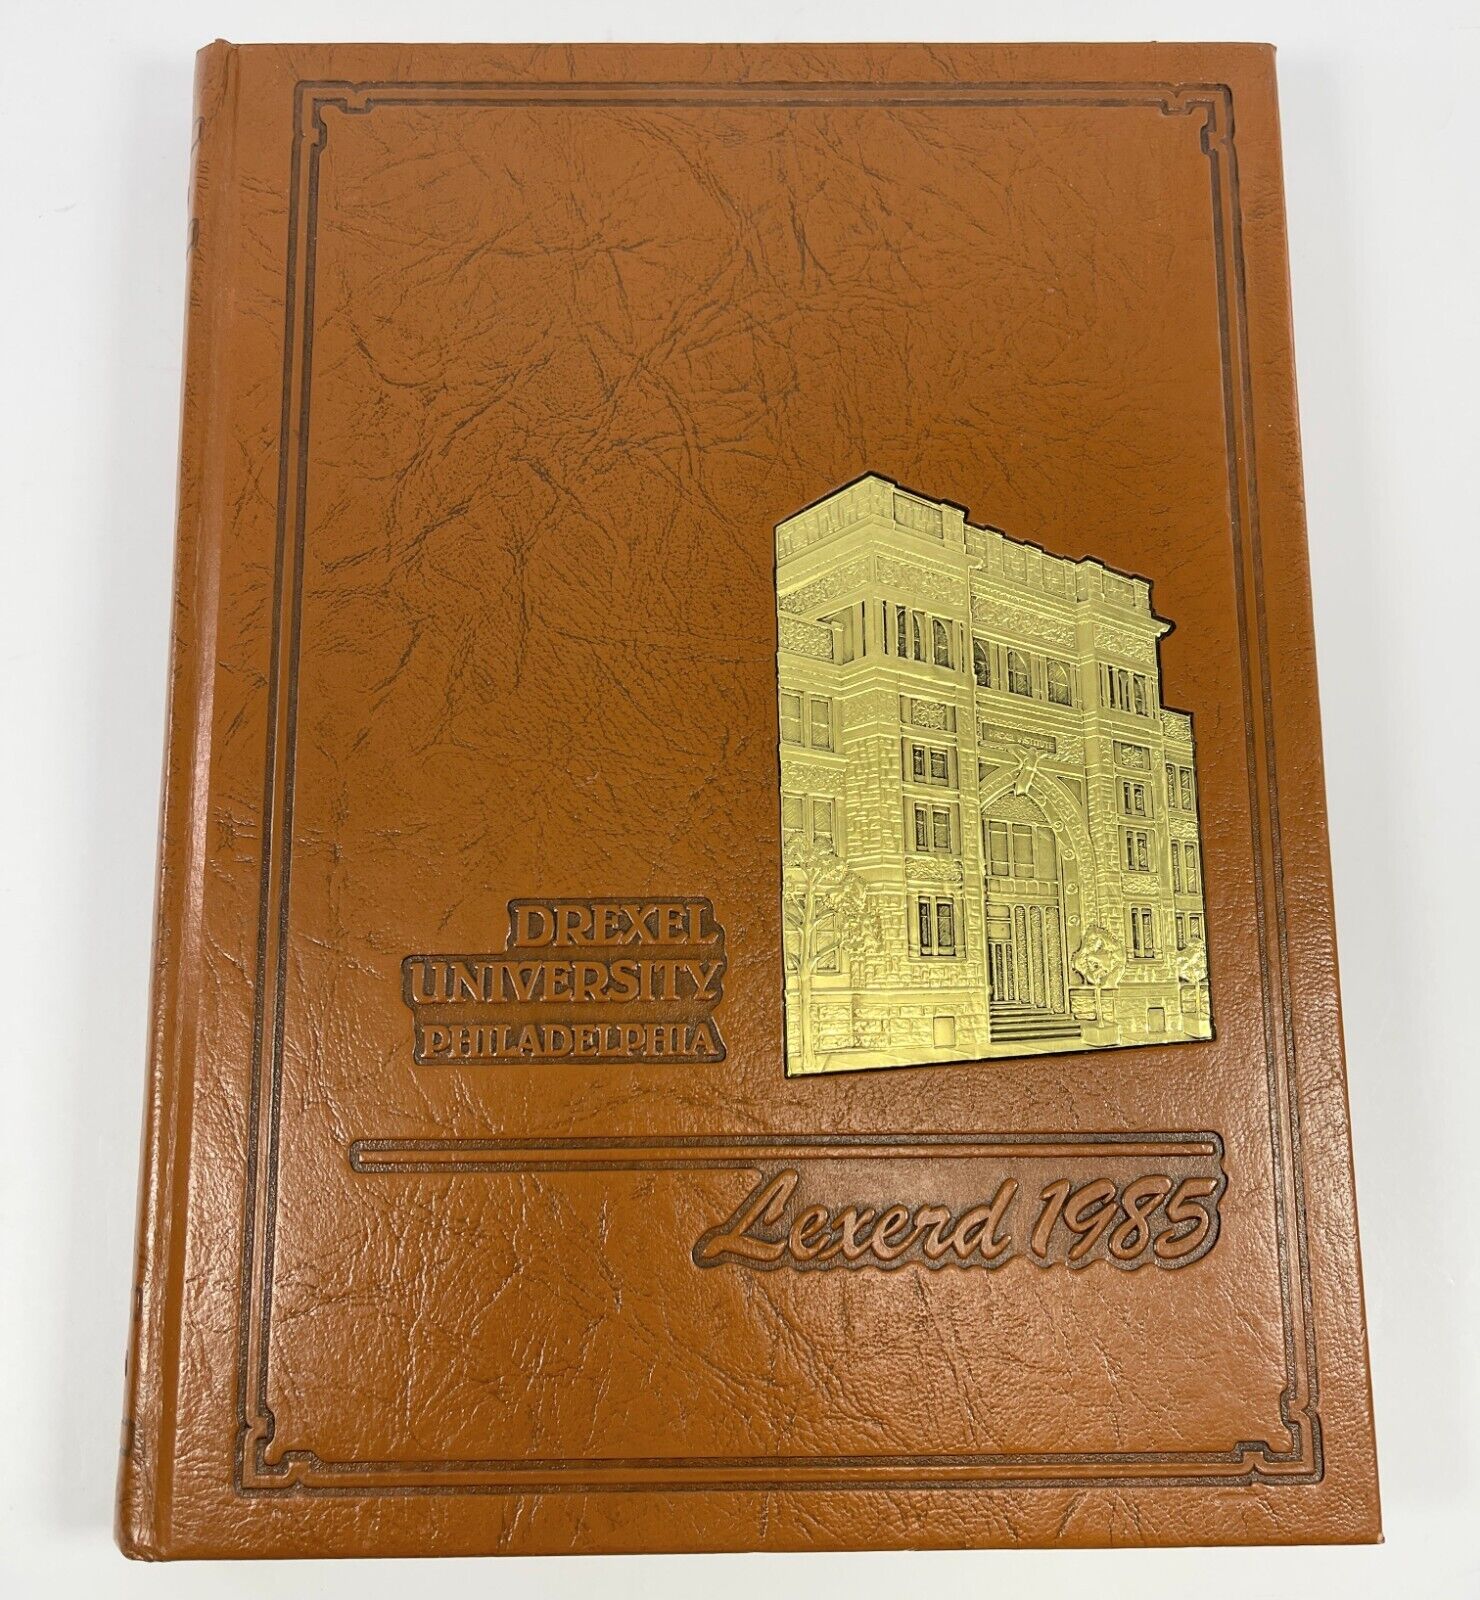 1985 Drexel University Philadelphia Pennsylvania College School Yearbook Lexerd